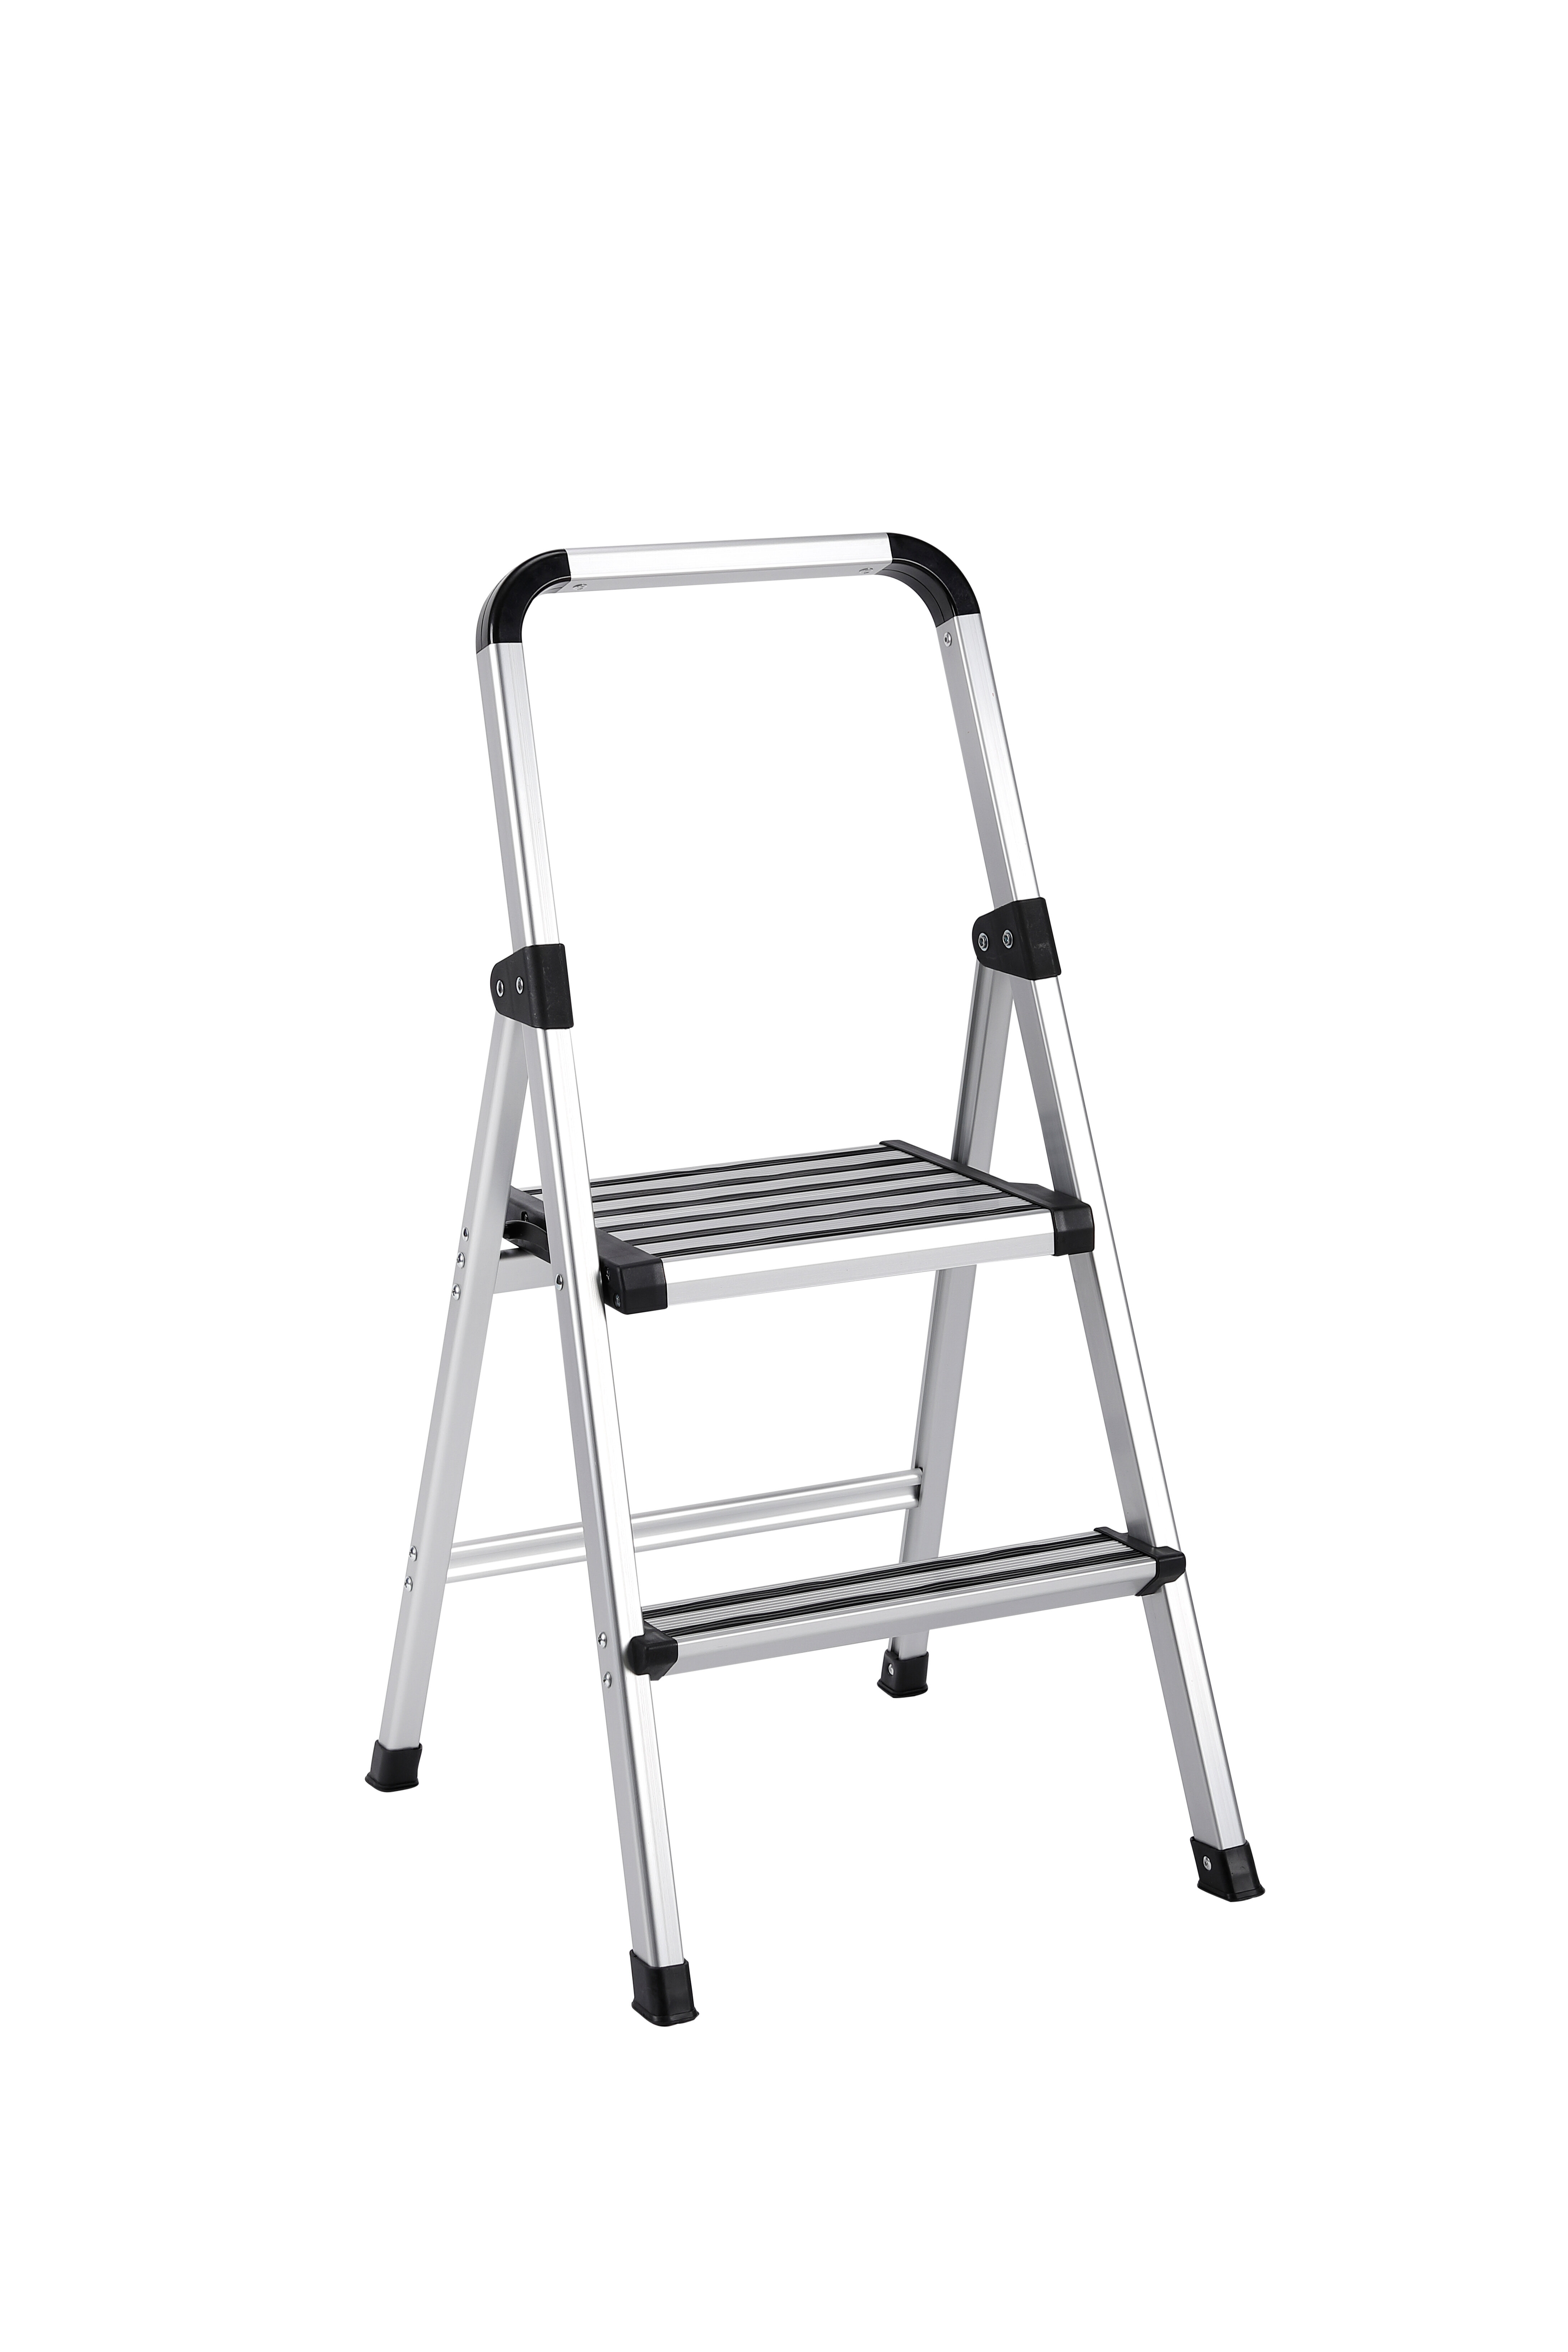 Ollieroo Folding One/2 Step Stepstool Ladder W/Non-Slip Rubber Platform Home Use 